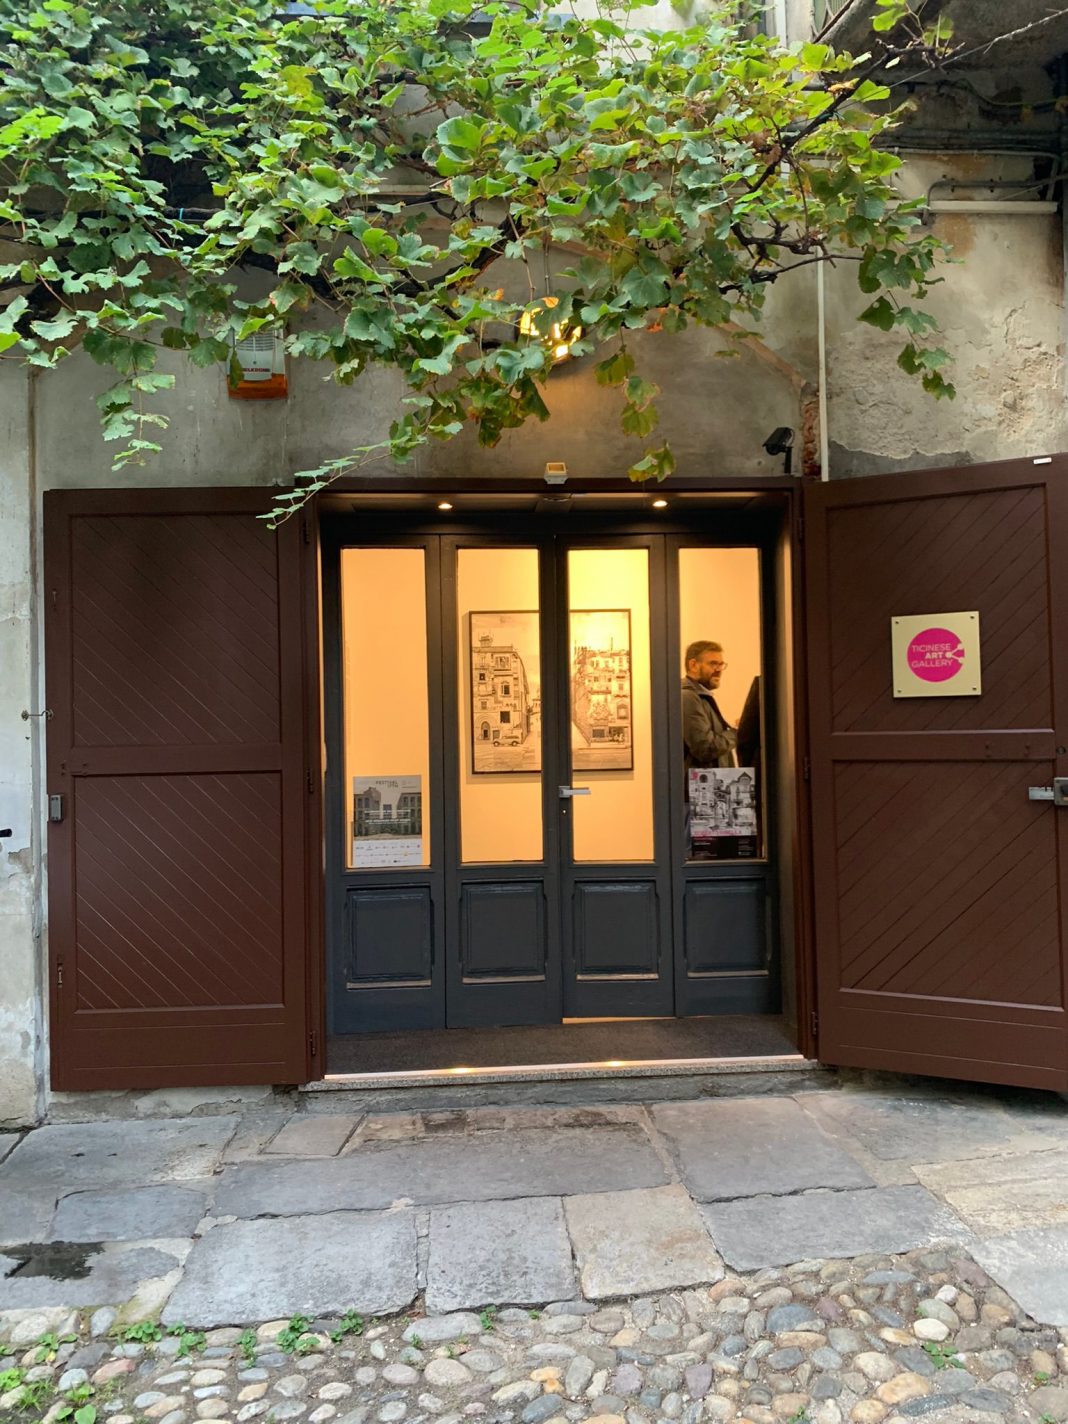 Ticinese Art Gallery